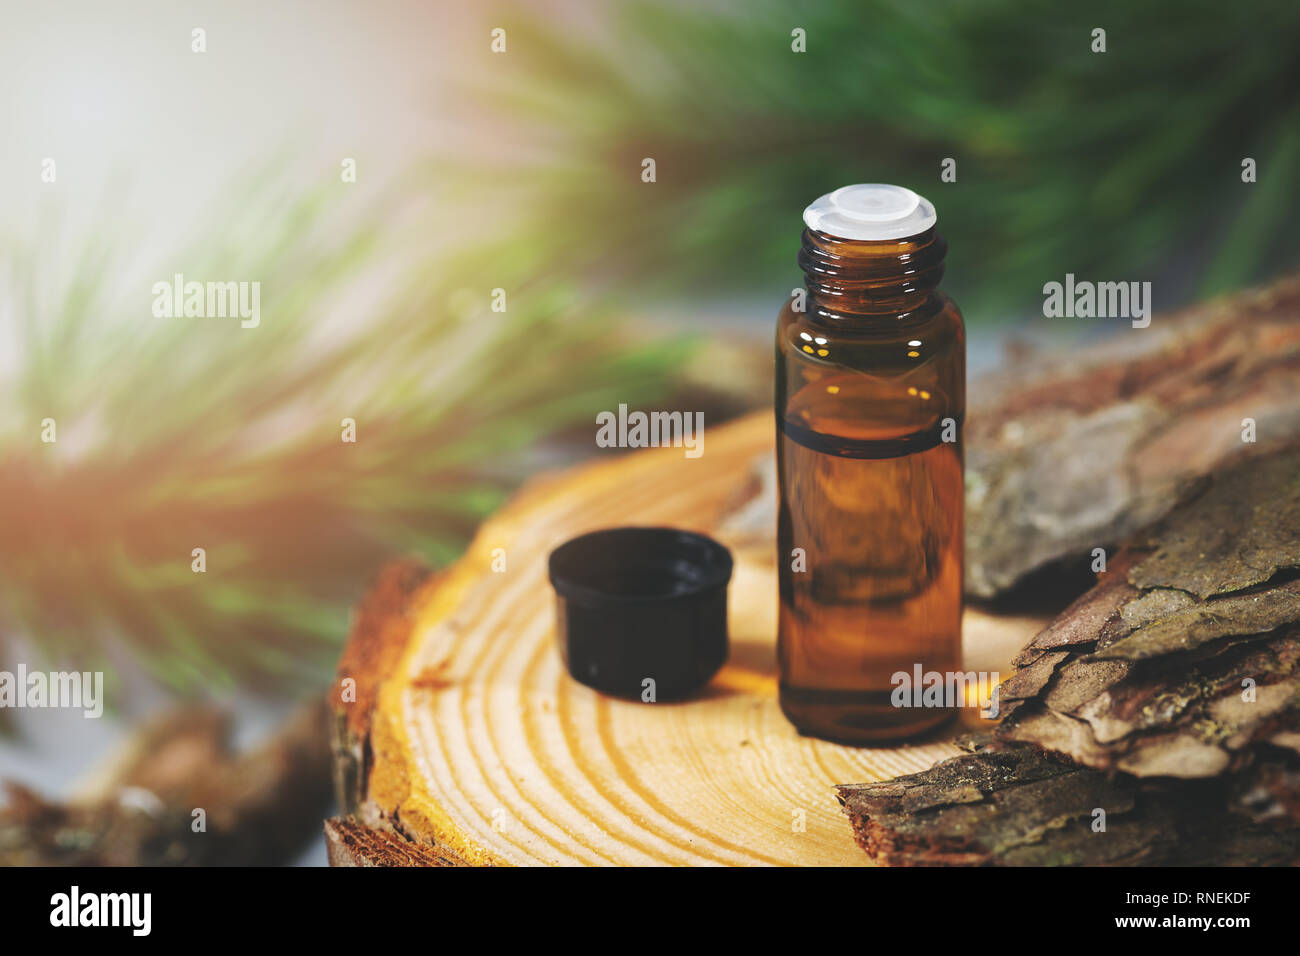 bottle with pine bark extract Stock Photo